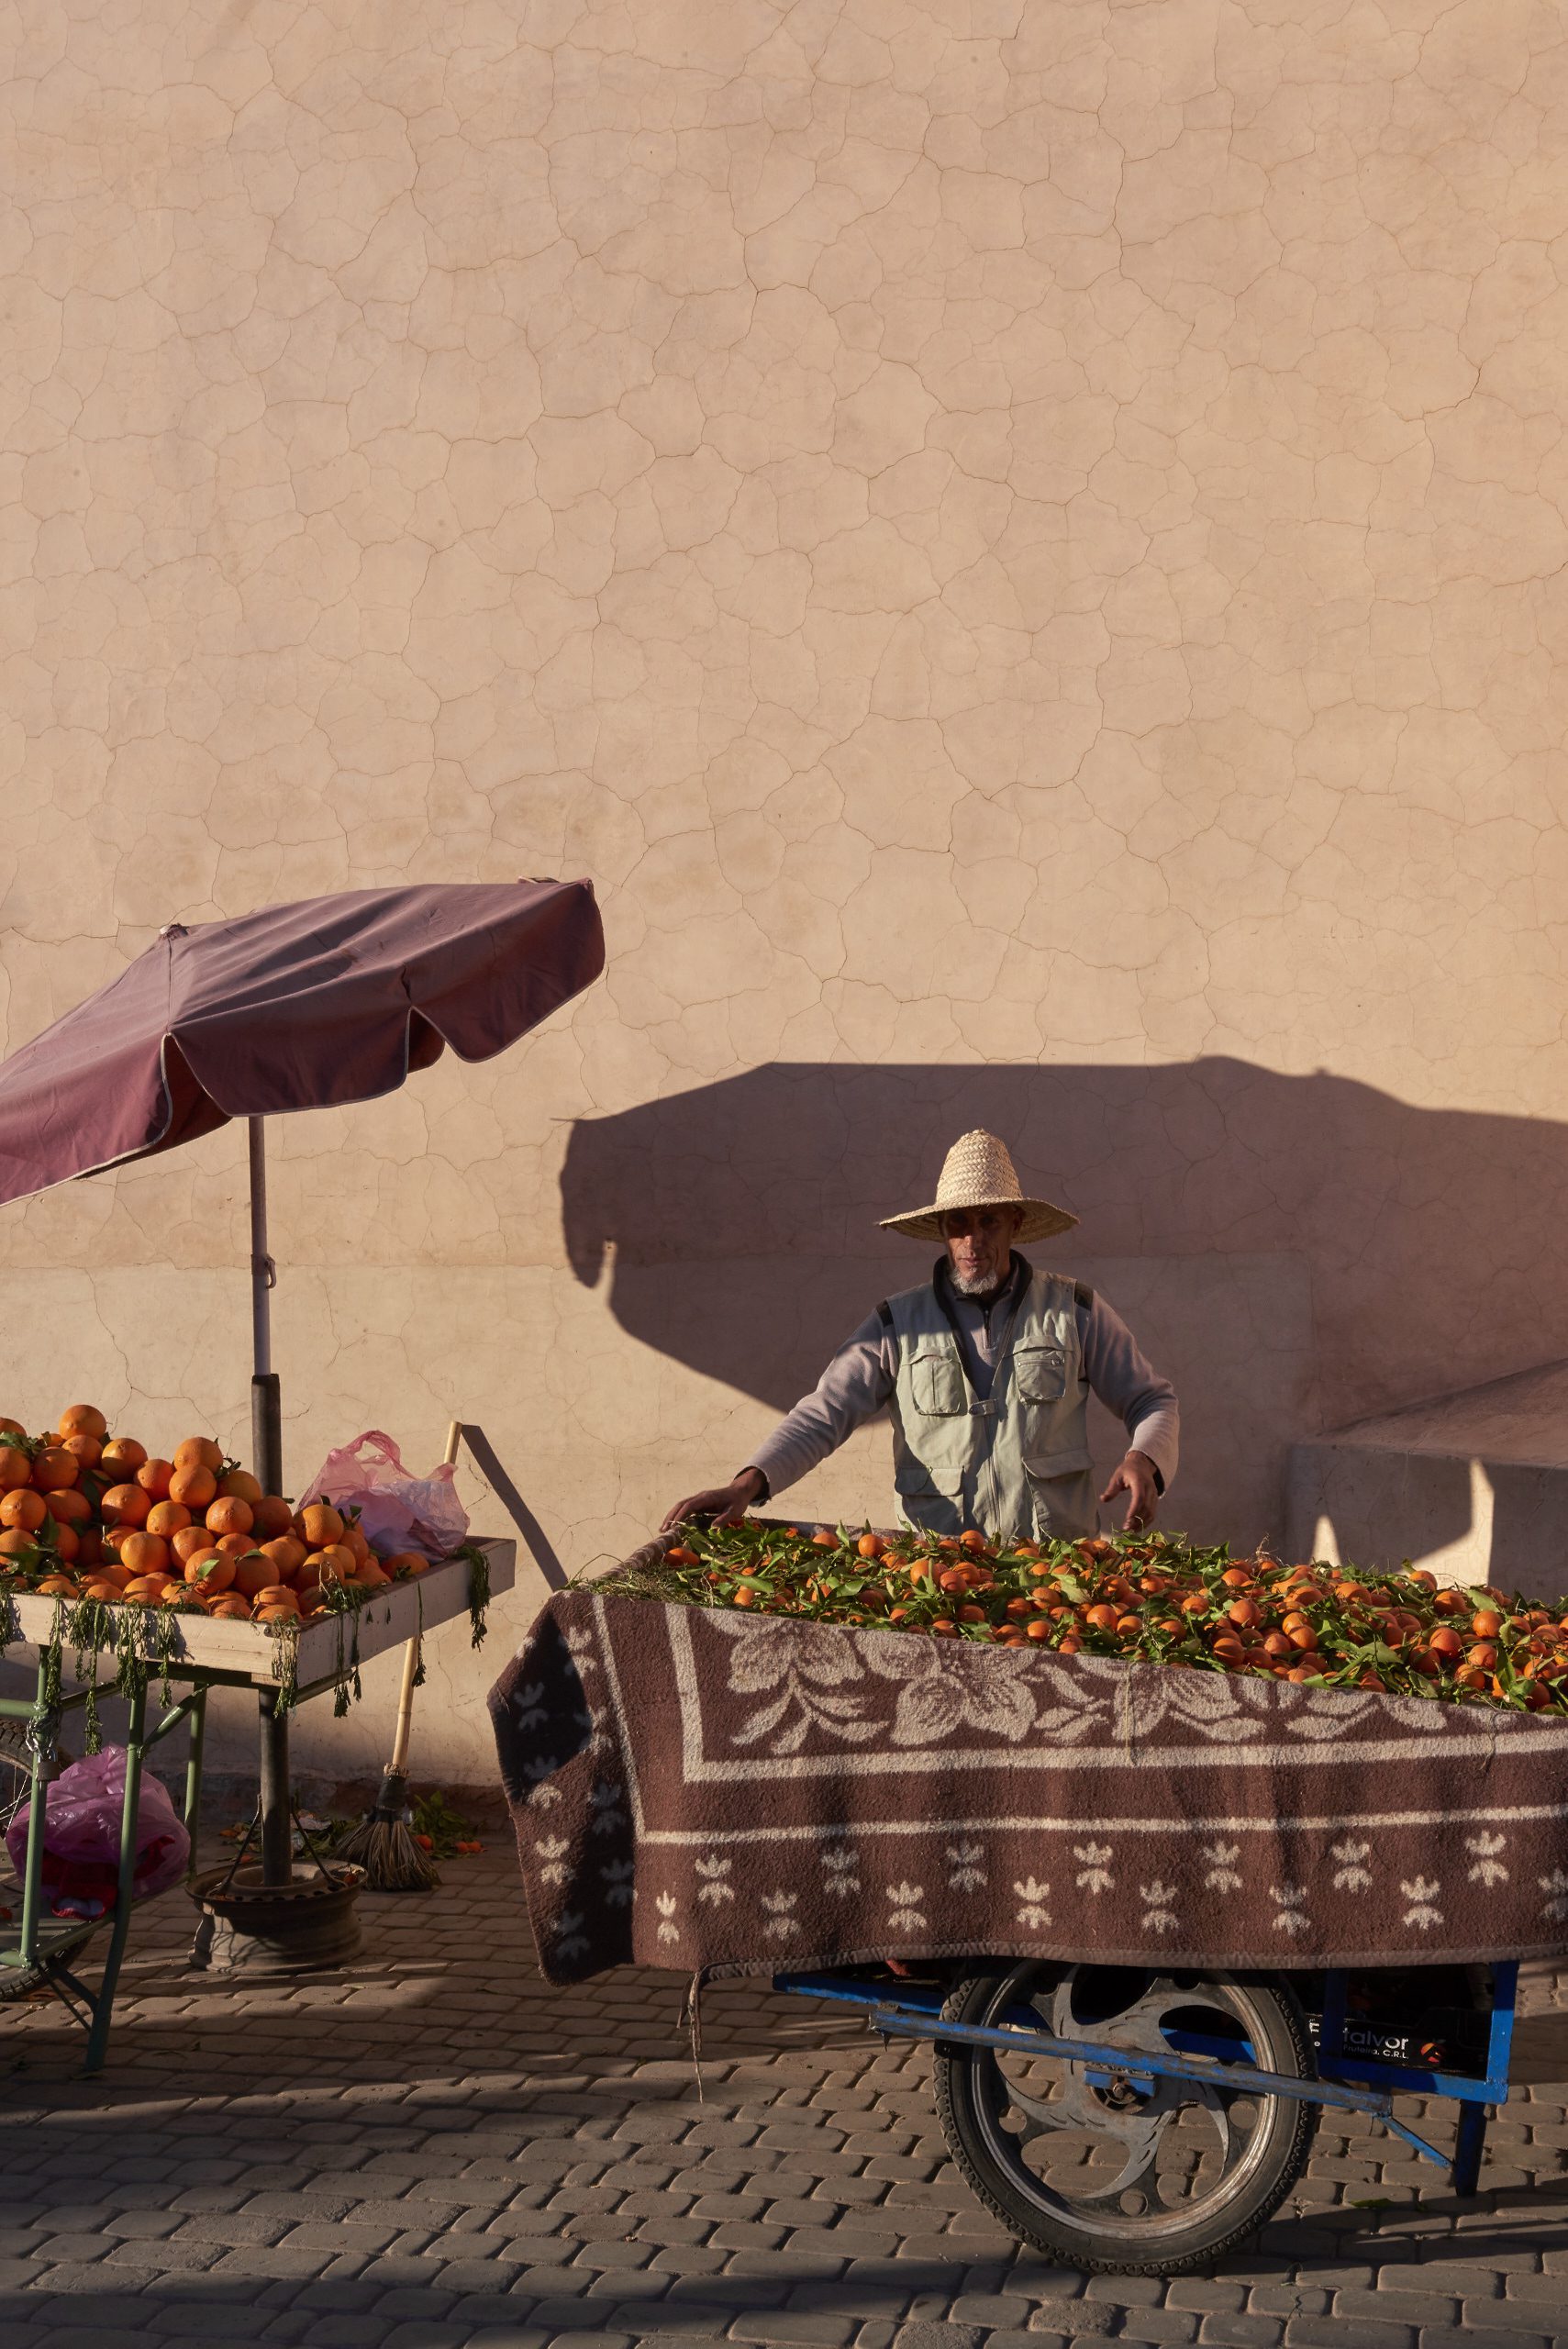 Vendor in Marrakesh